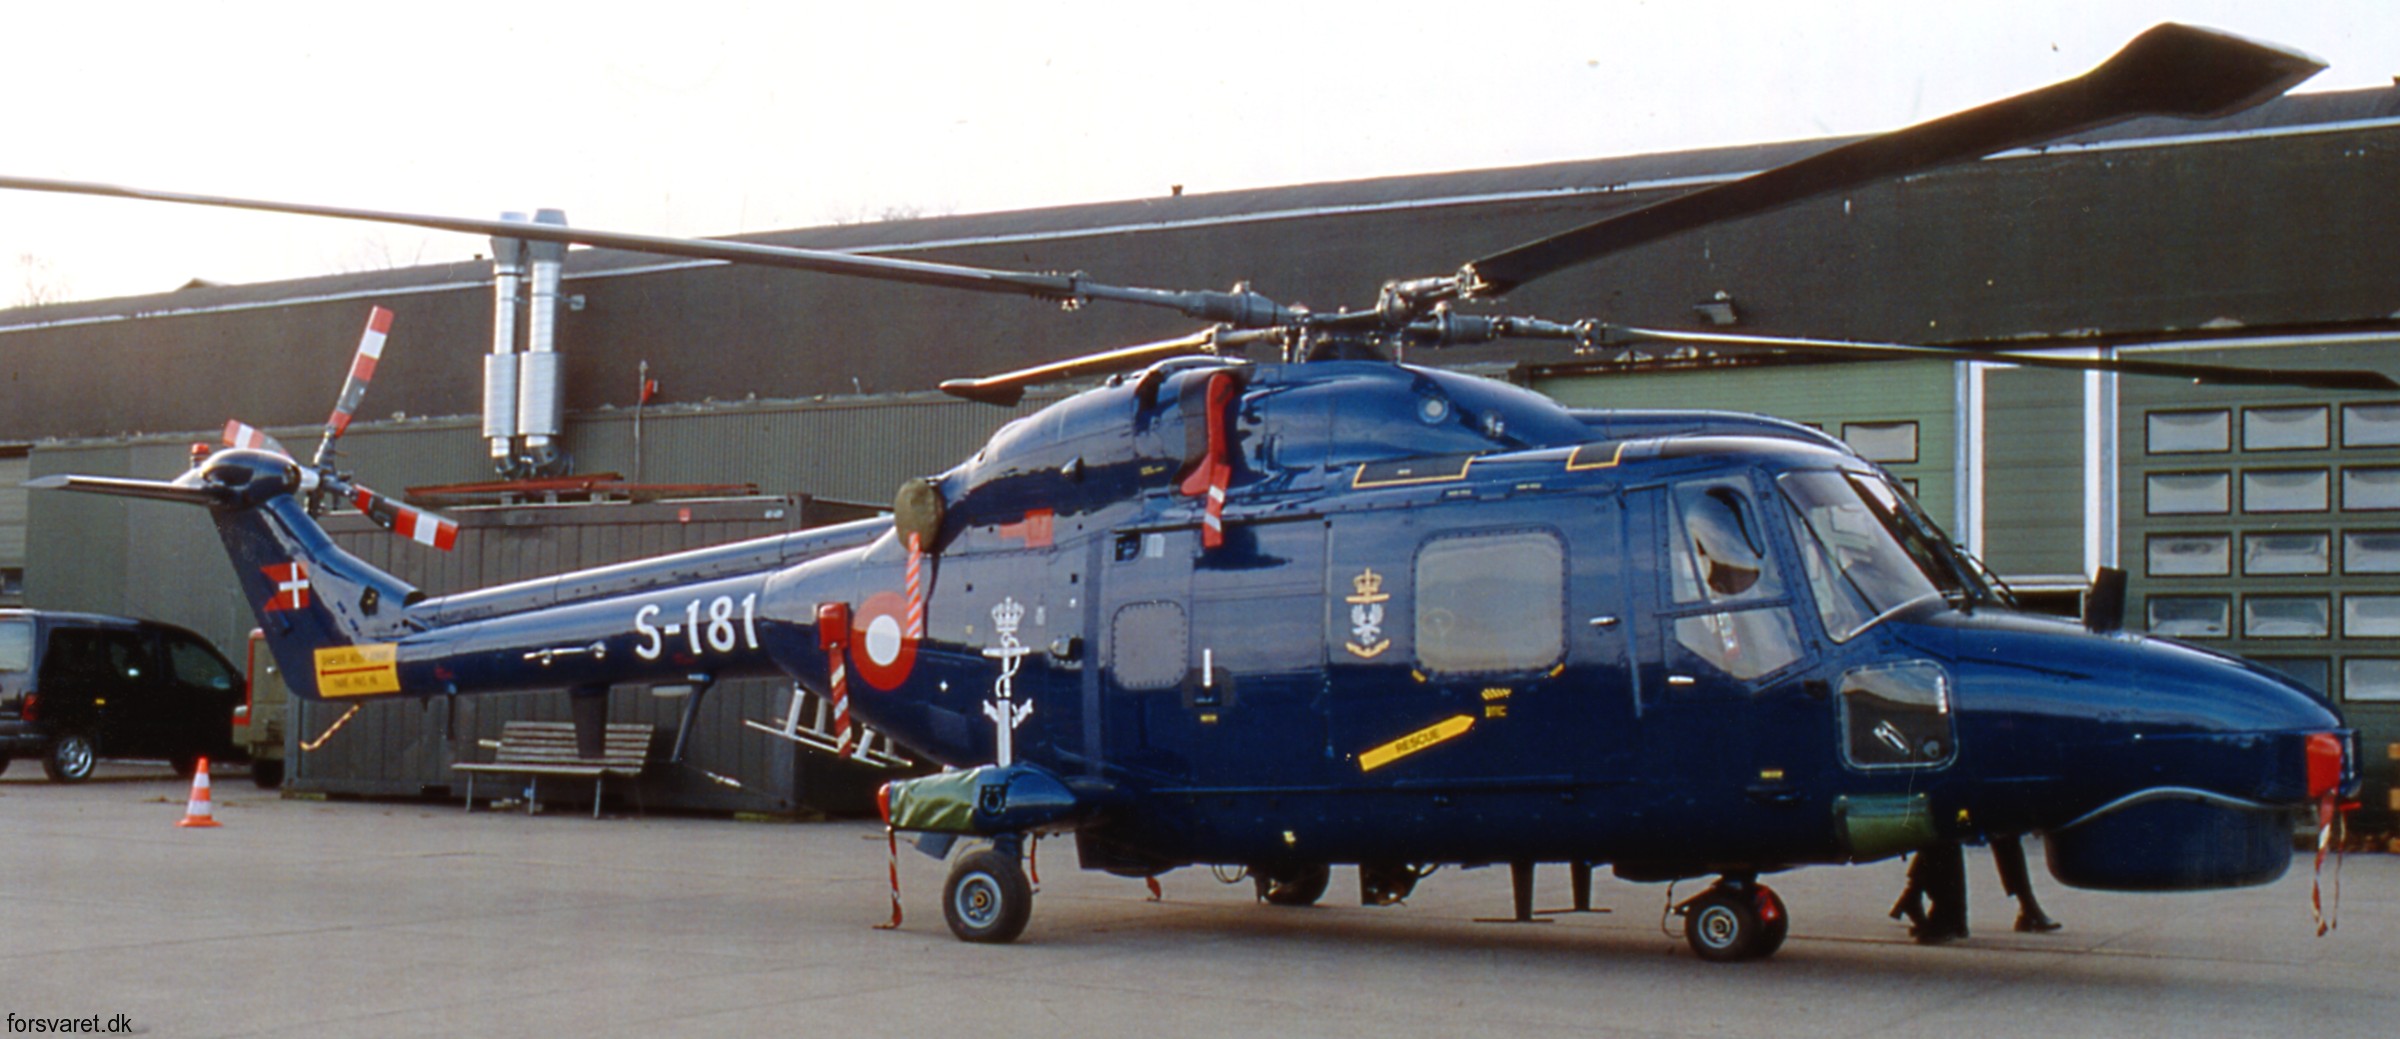 lynx mk.80 mk.90b helicopter westland royal danish navy air force kongelige danske marine flyvevabnet s-181 13